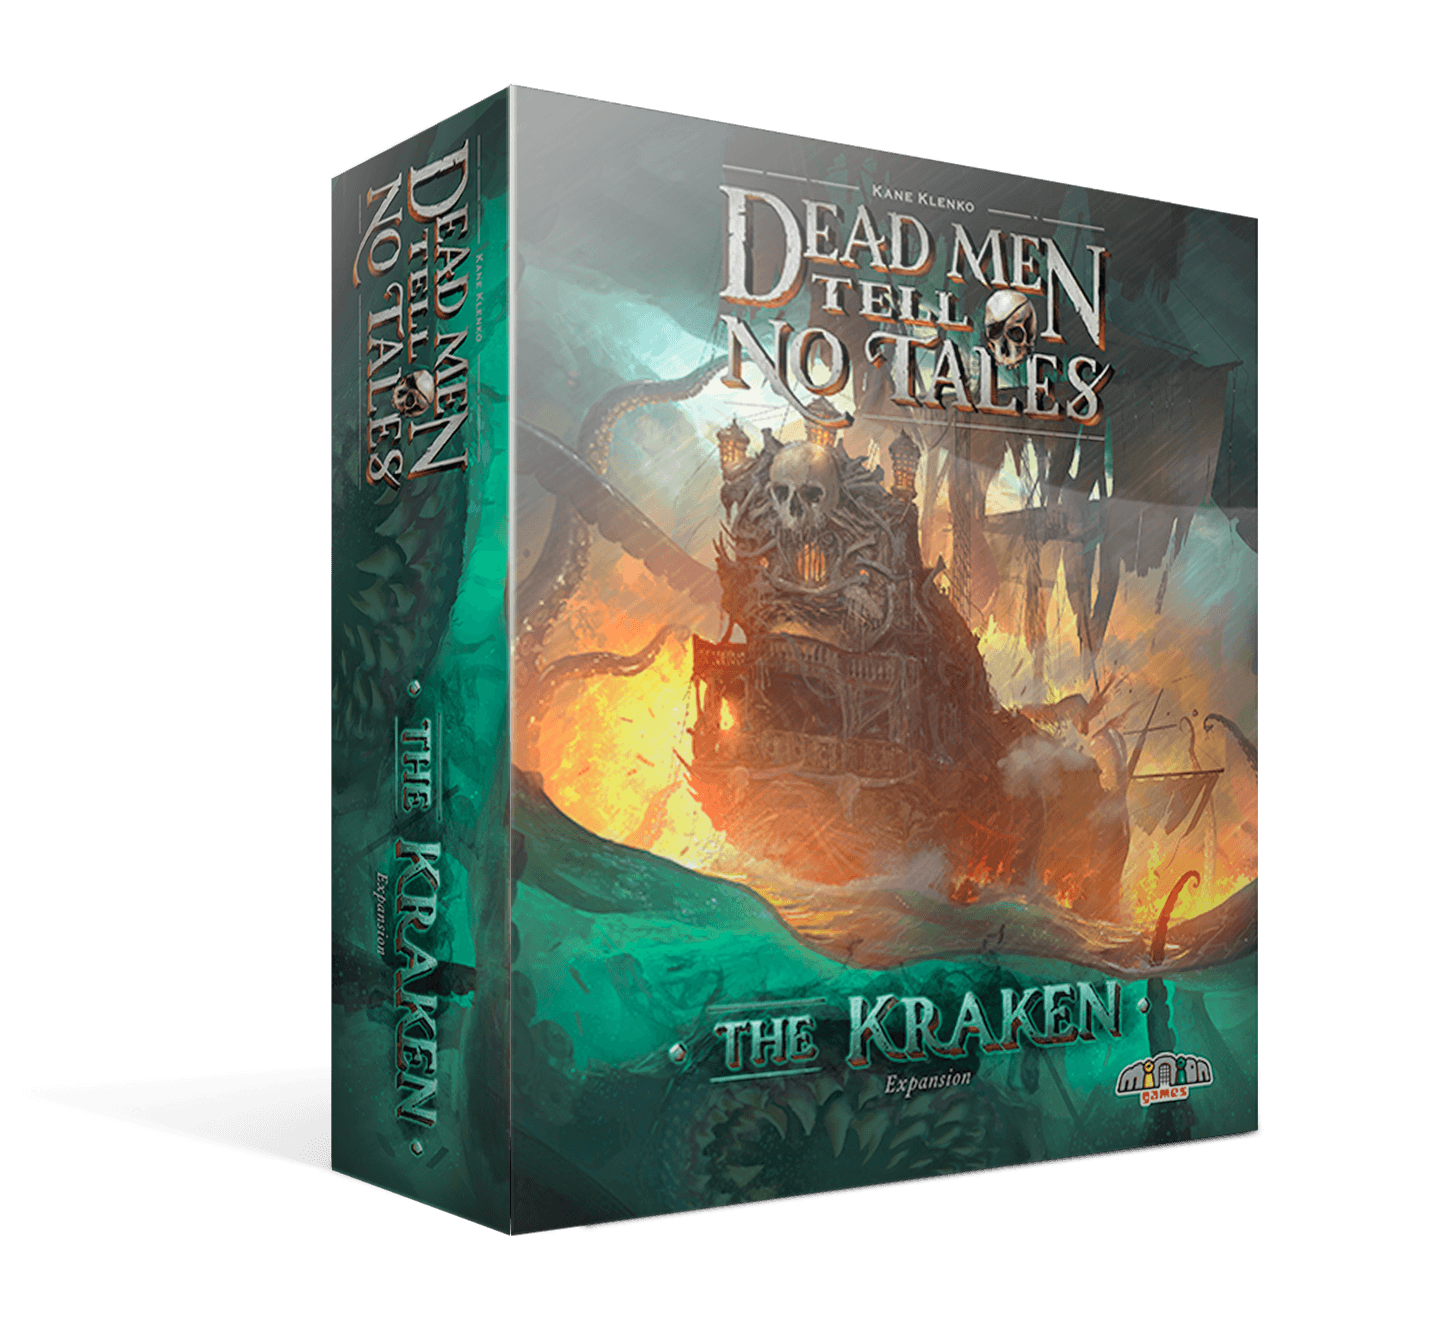 Dead Men Tell No Tales: The Kraken expansion